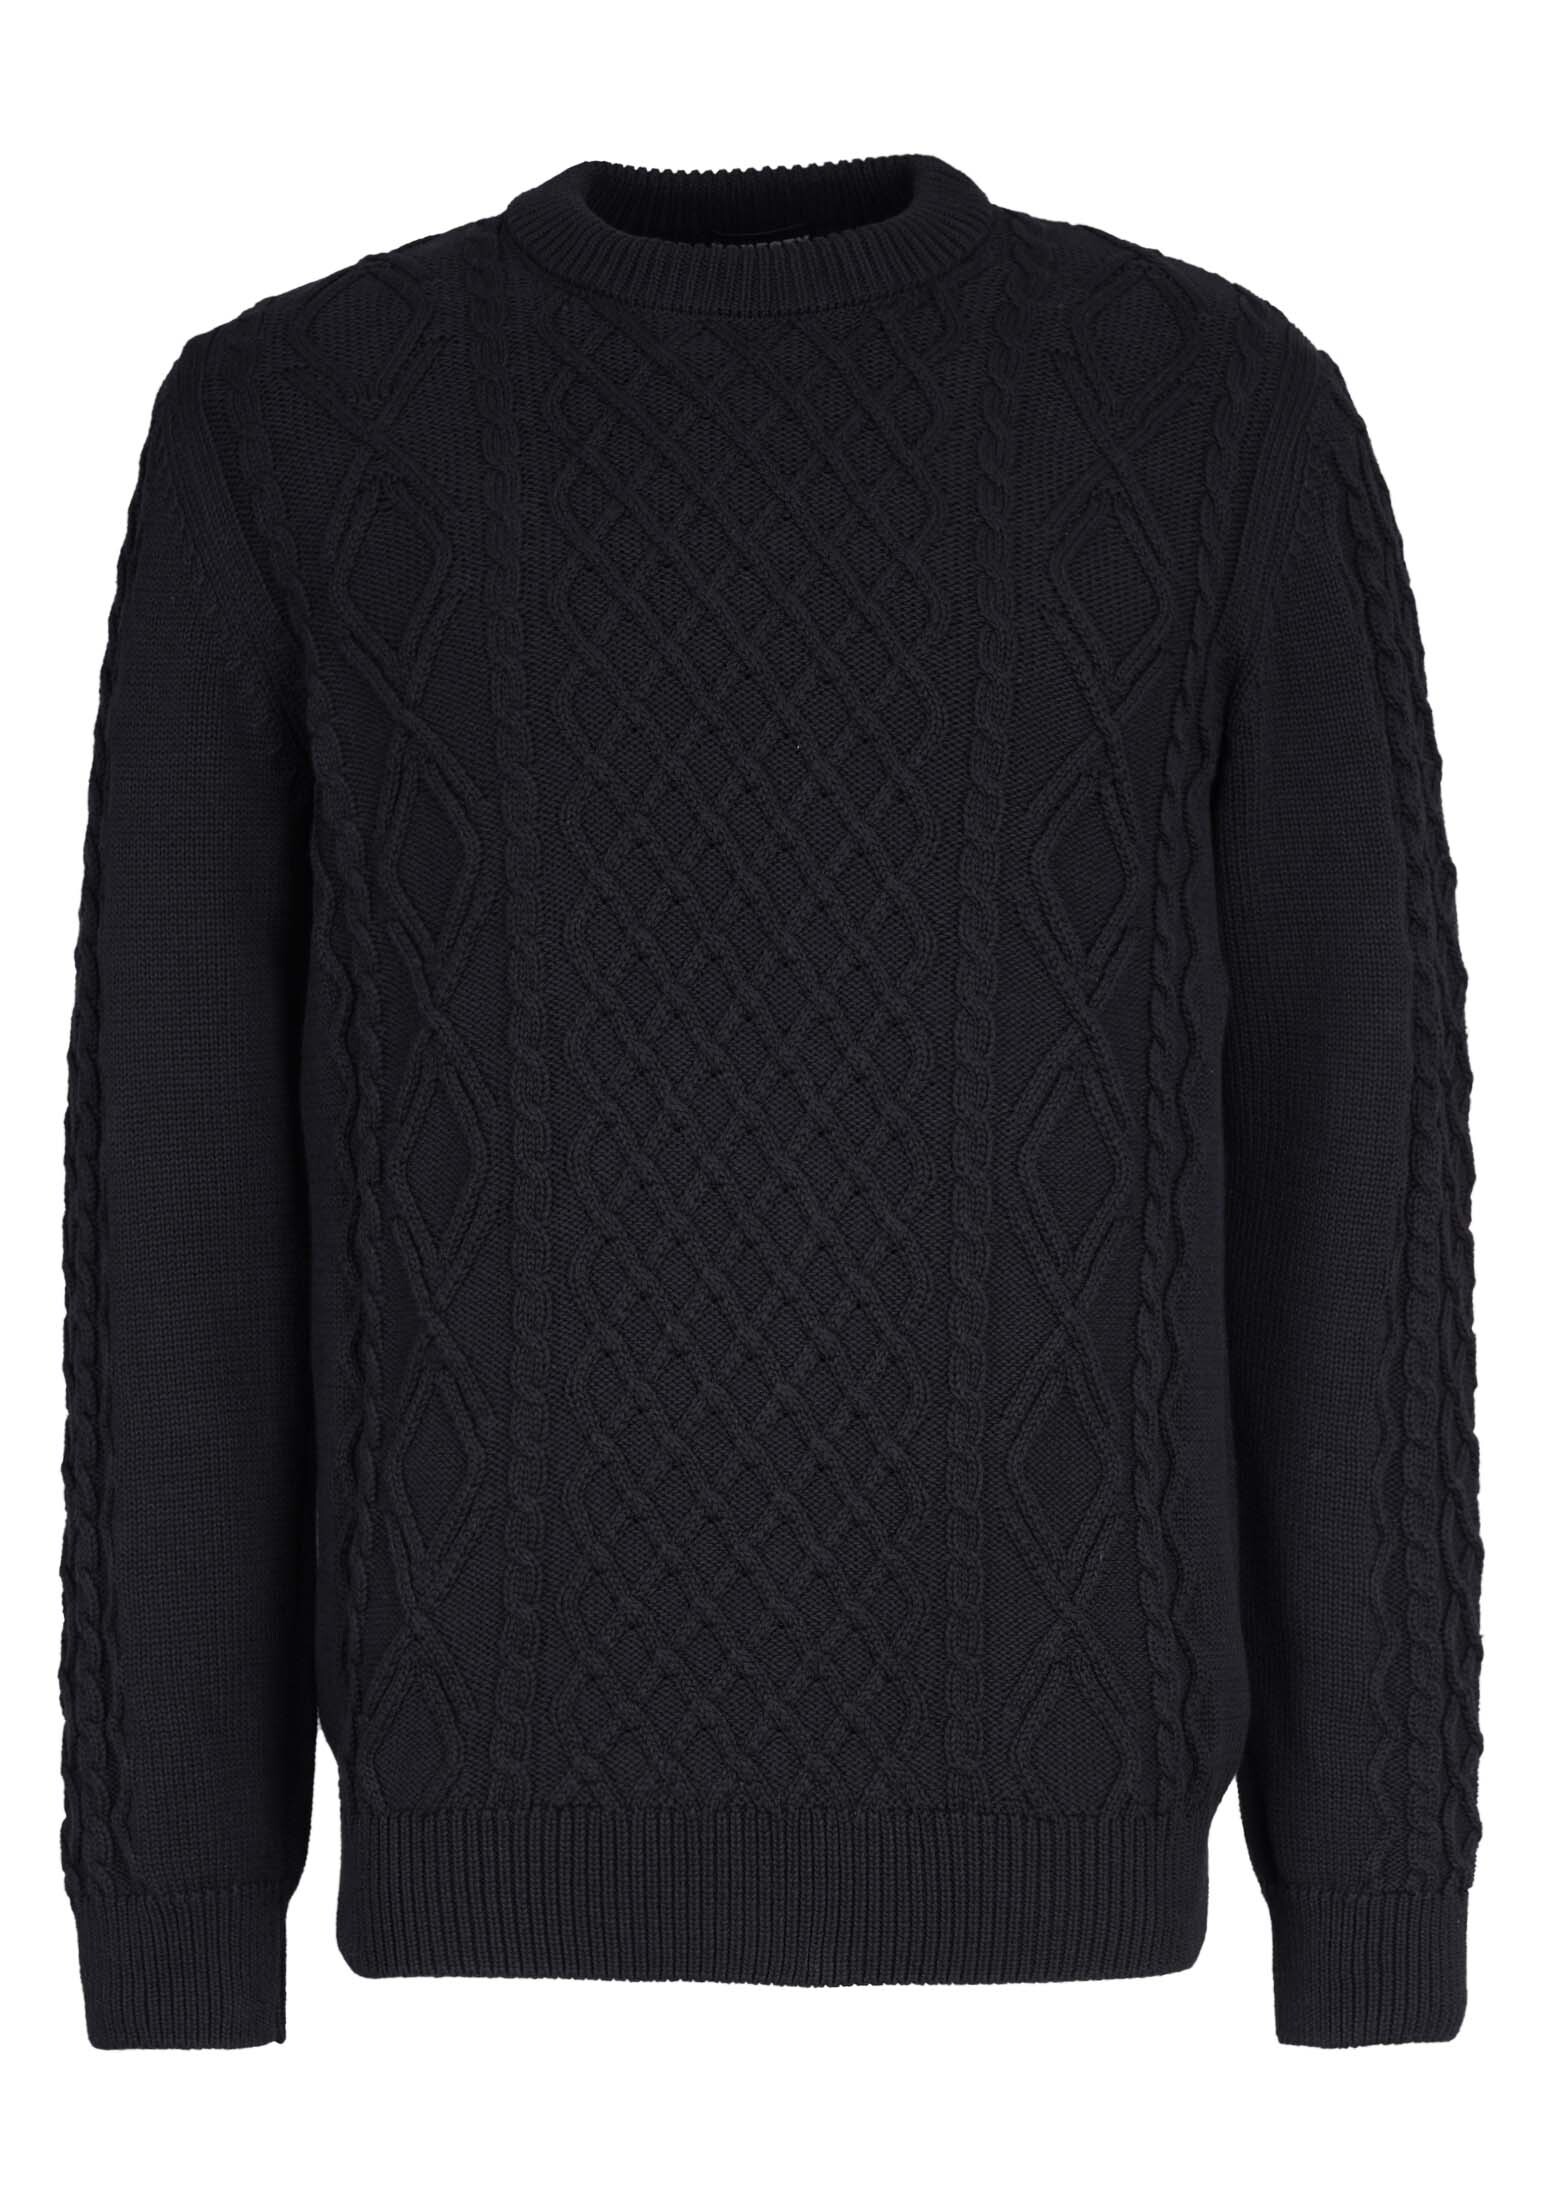 пуловер honesty rules strick jacquard цвет multi colors Пуловер HONESTY RULES Strick Cable, черный